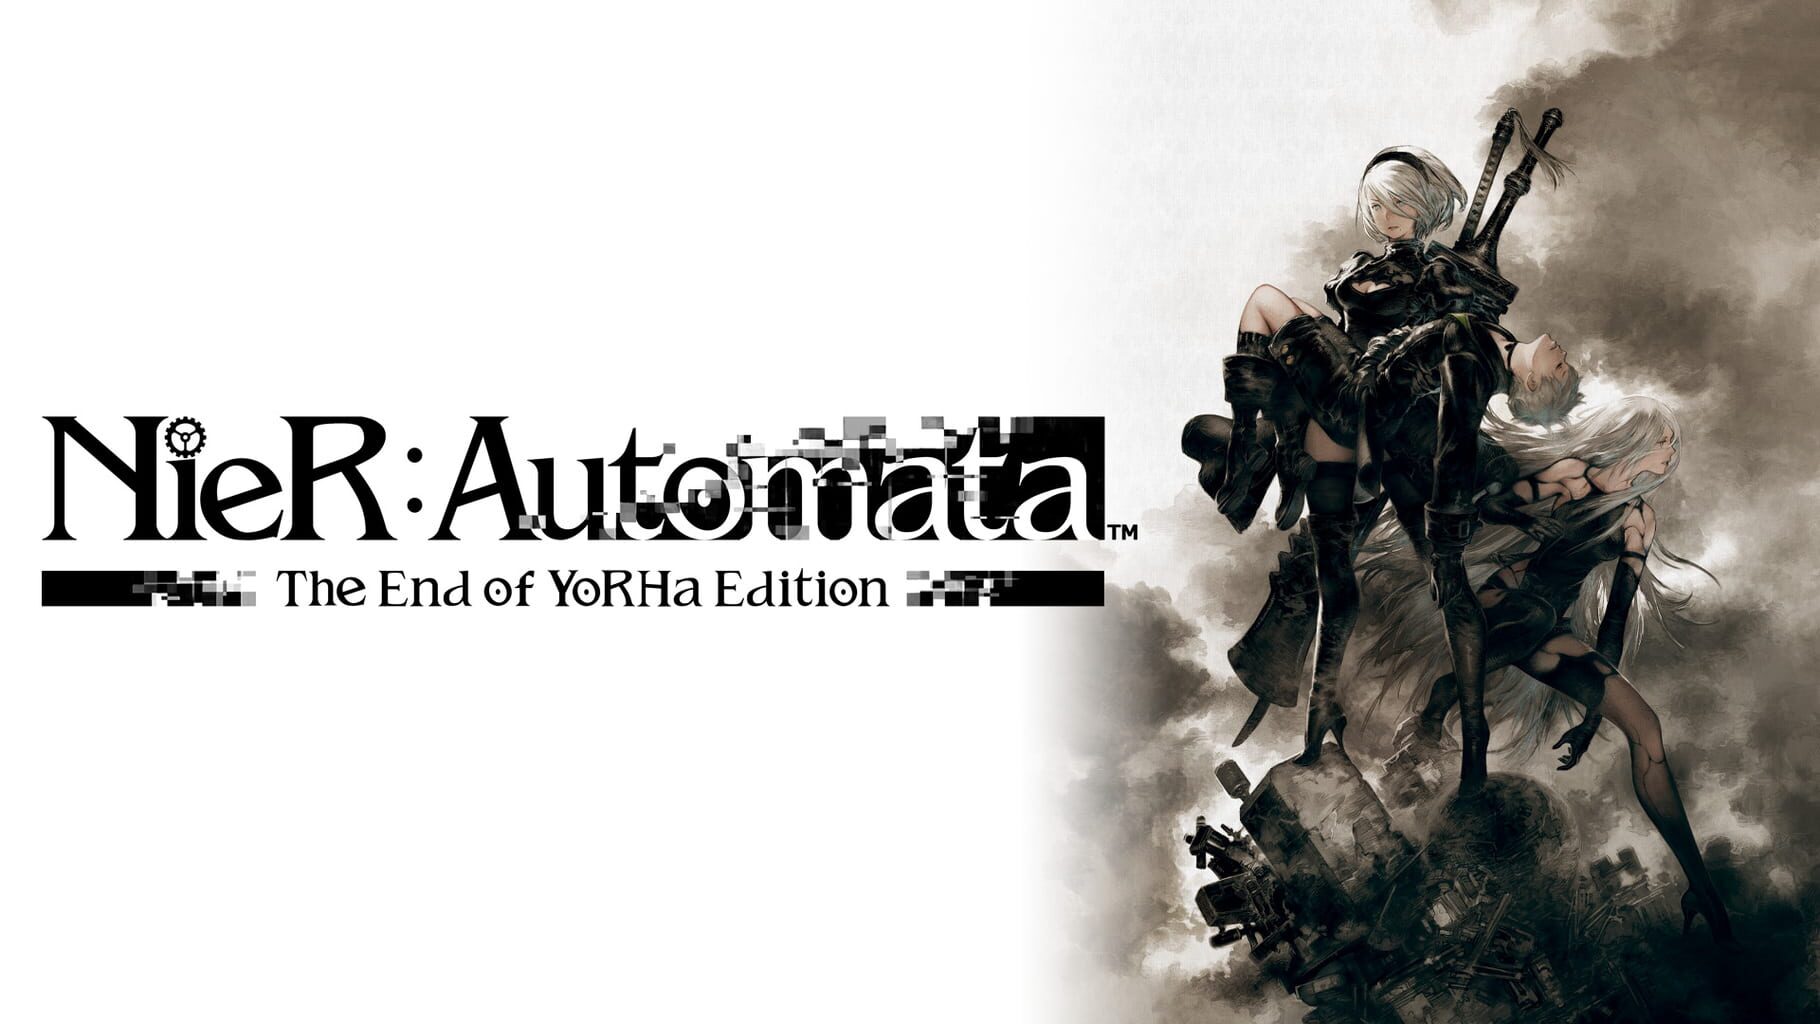 Nier: Automata - The End of Yorha Edition artwork